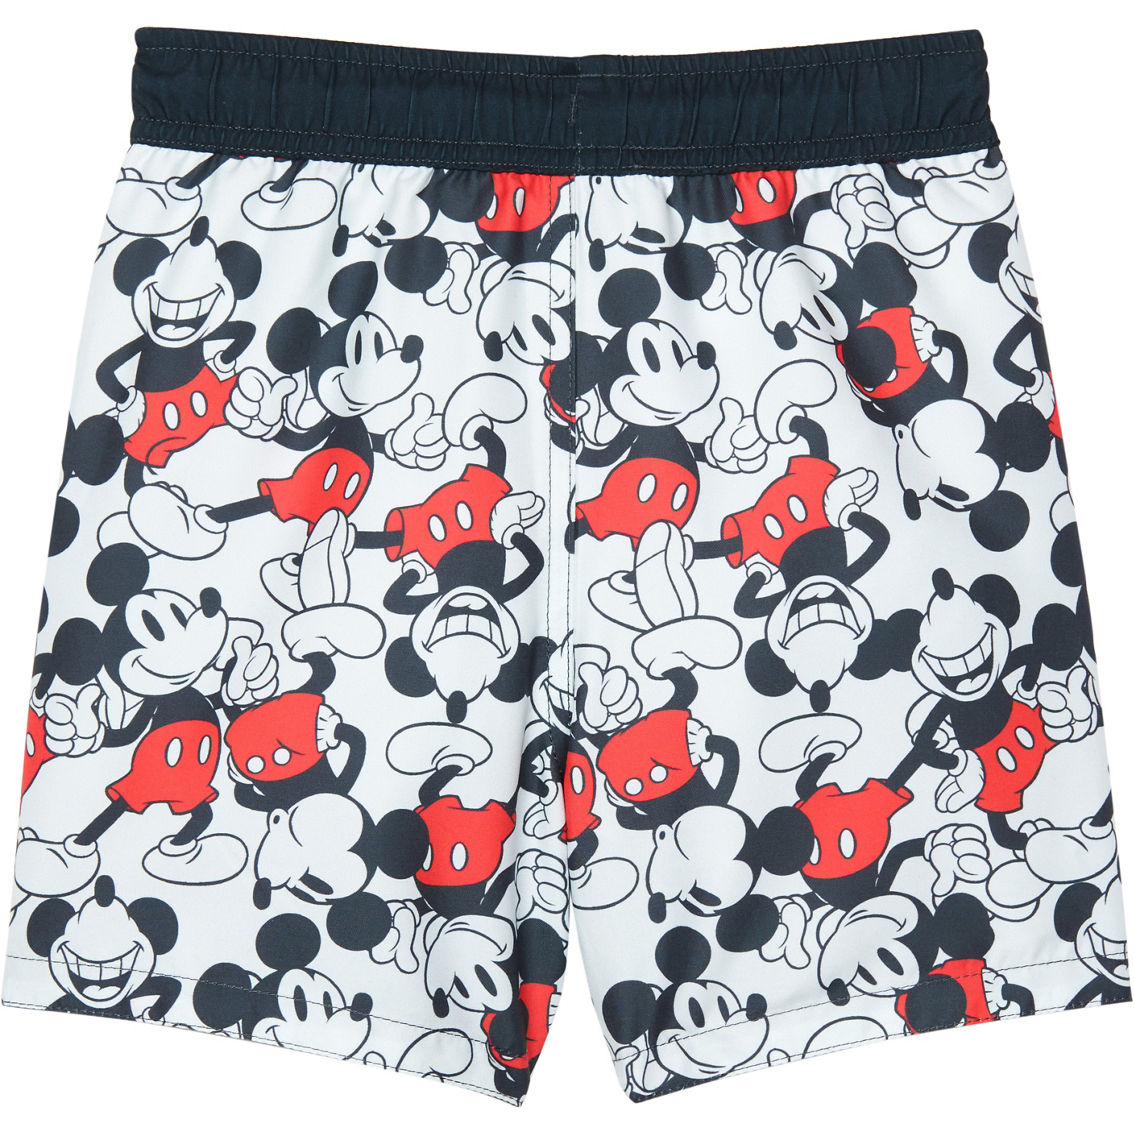 Disney Toddler Boys Mickey Mouse Swim Trunks - Image 2 of 2